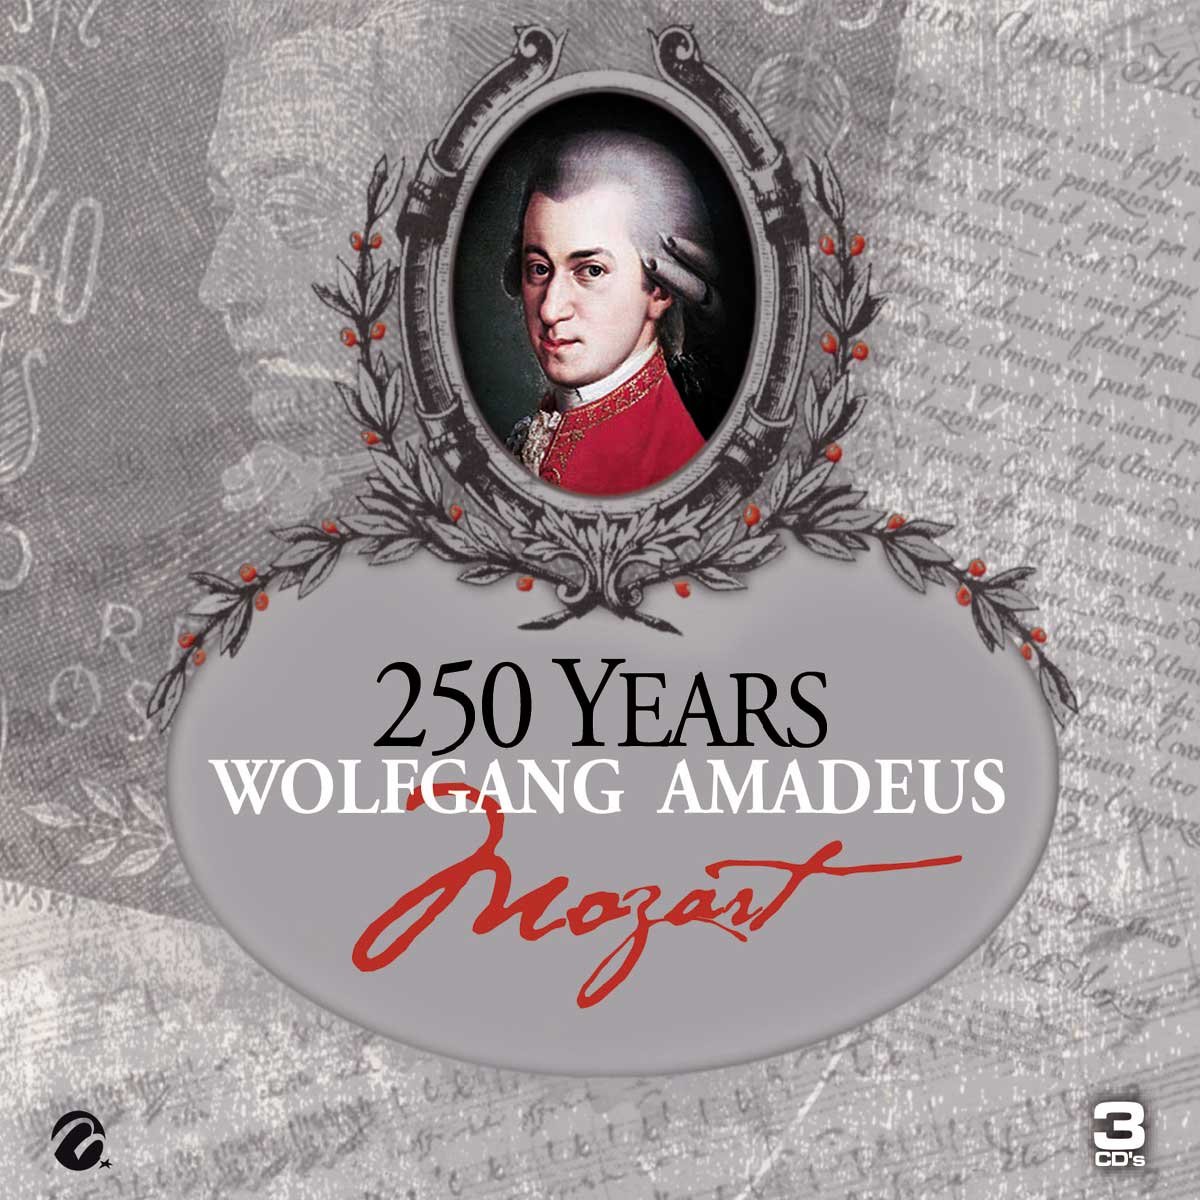 3 Cds   Wolfang Amadeus Mozart "250 Years"